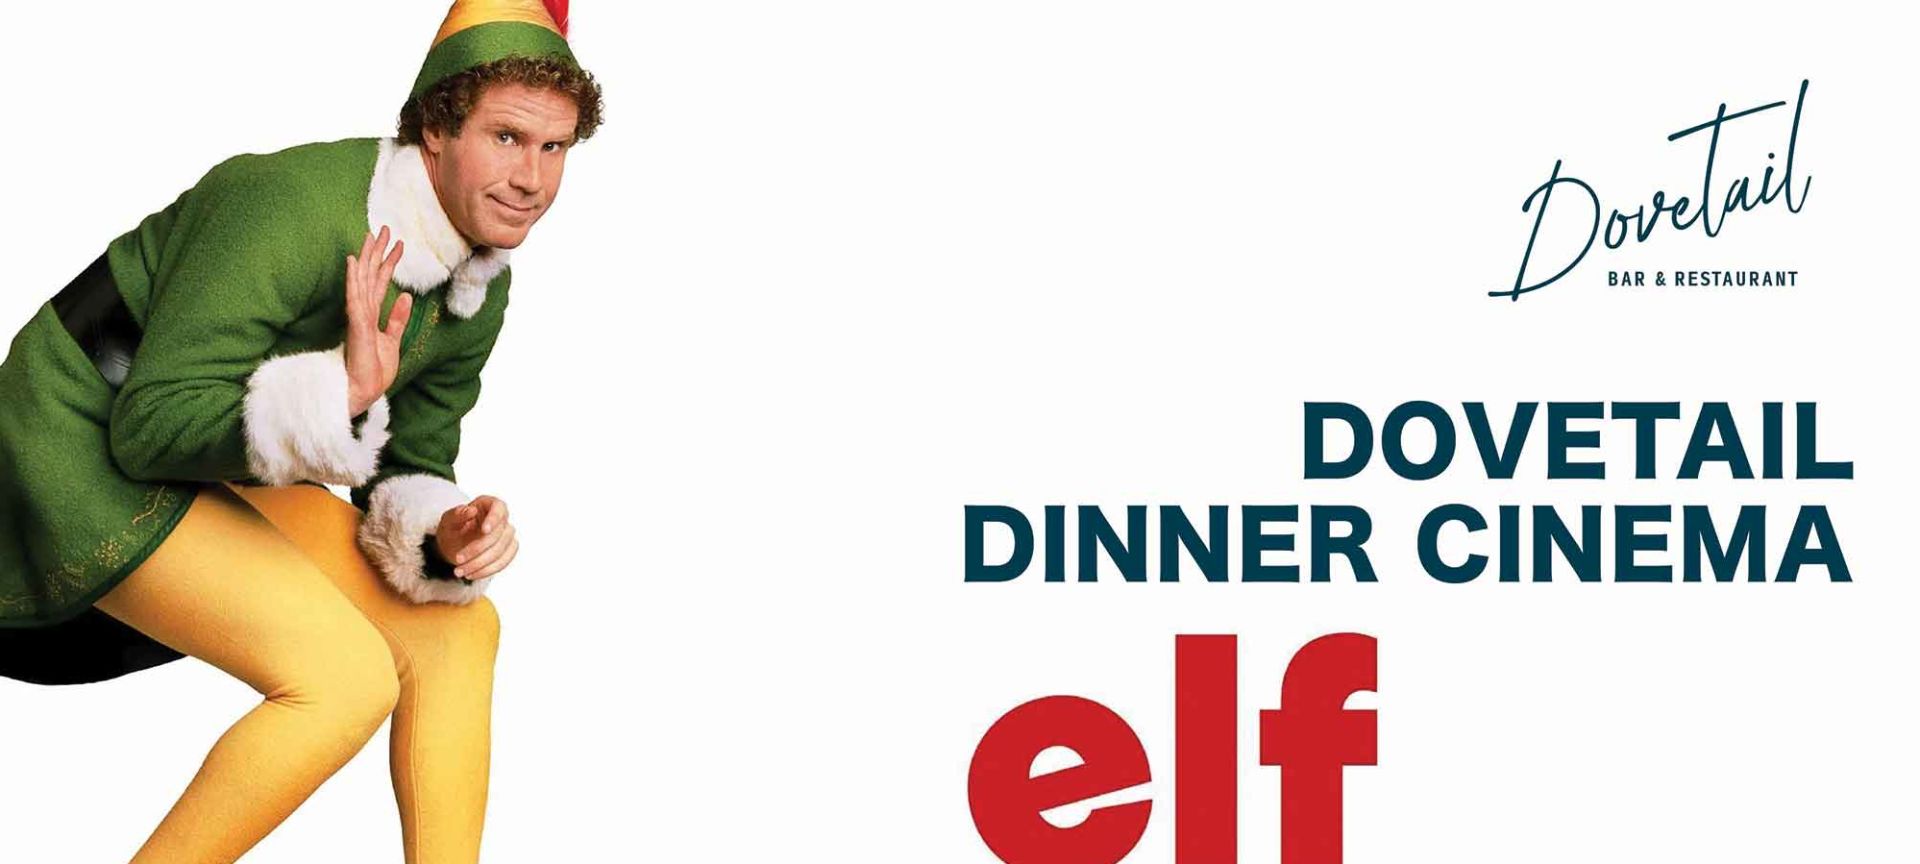 Dovetail Dinner Cinema Featuring Elf